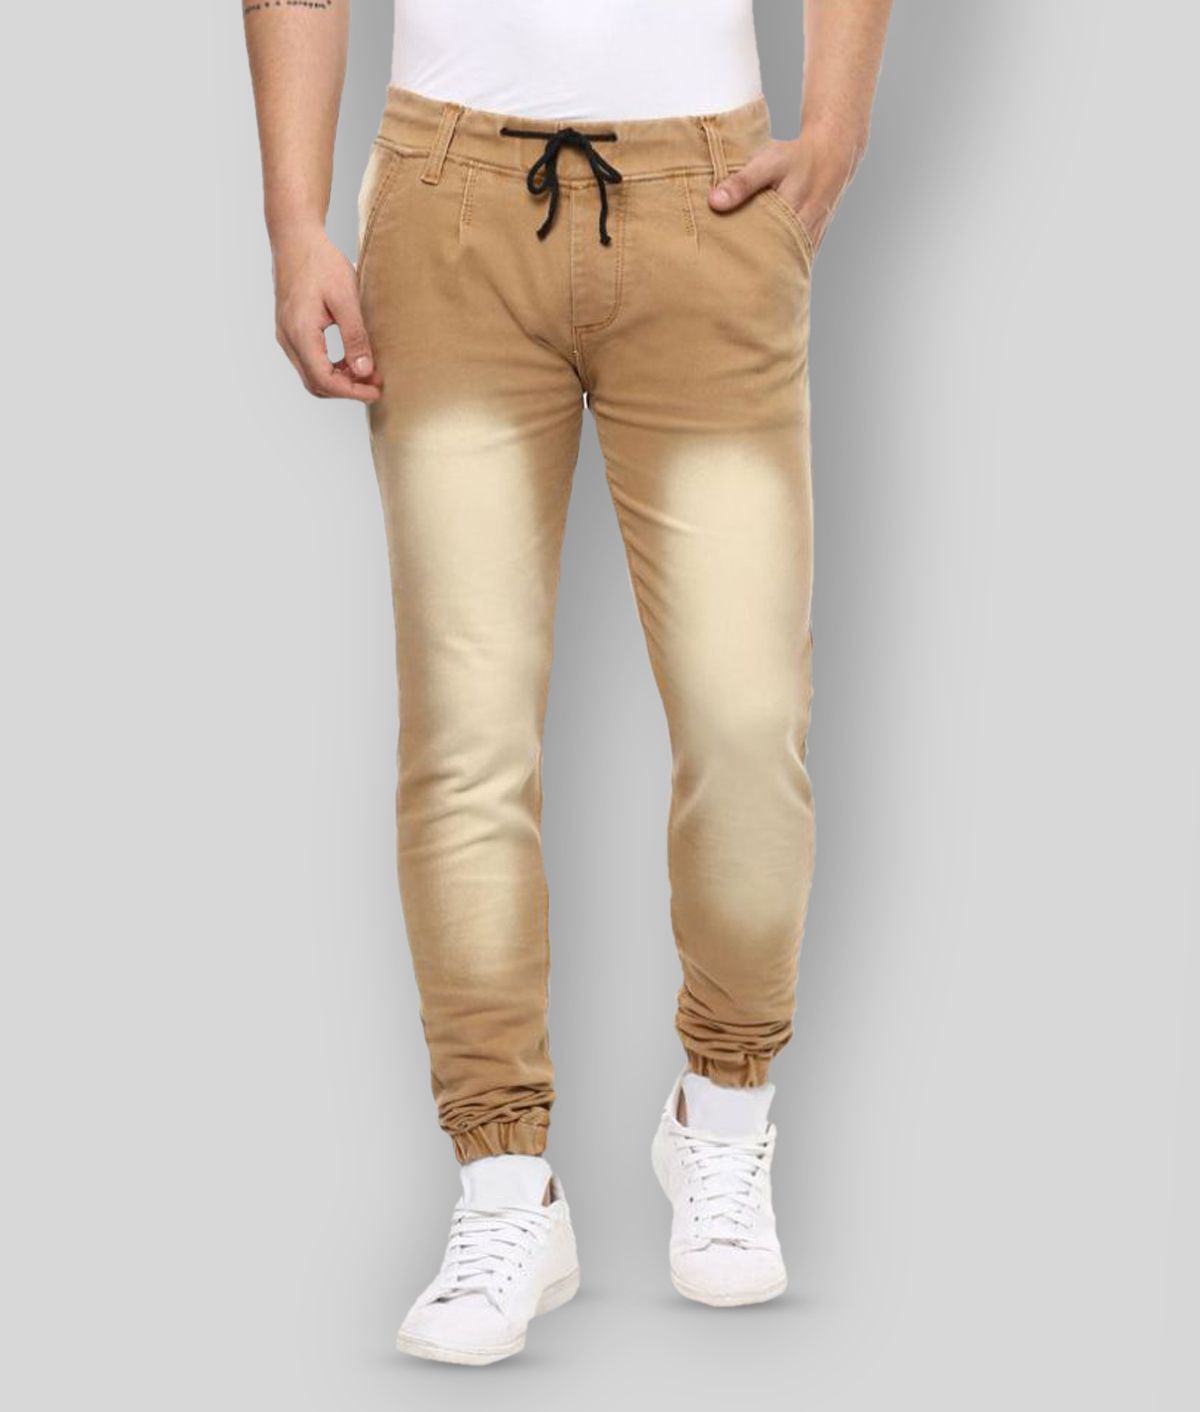 Urbano Fashion - Khaki Cotton Blend Slim Fit Men's Jeans ( Pack of 1 )